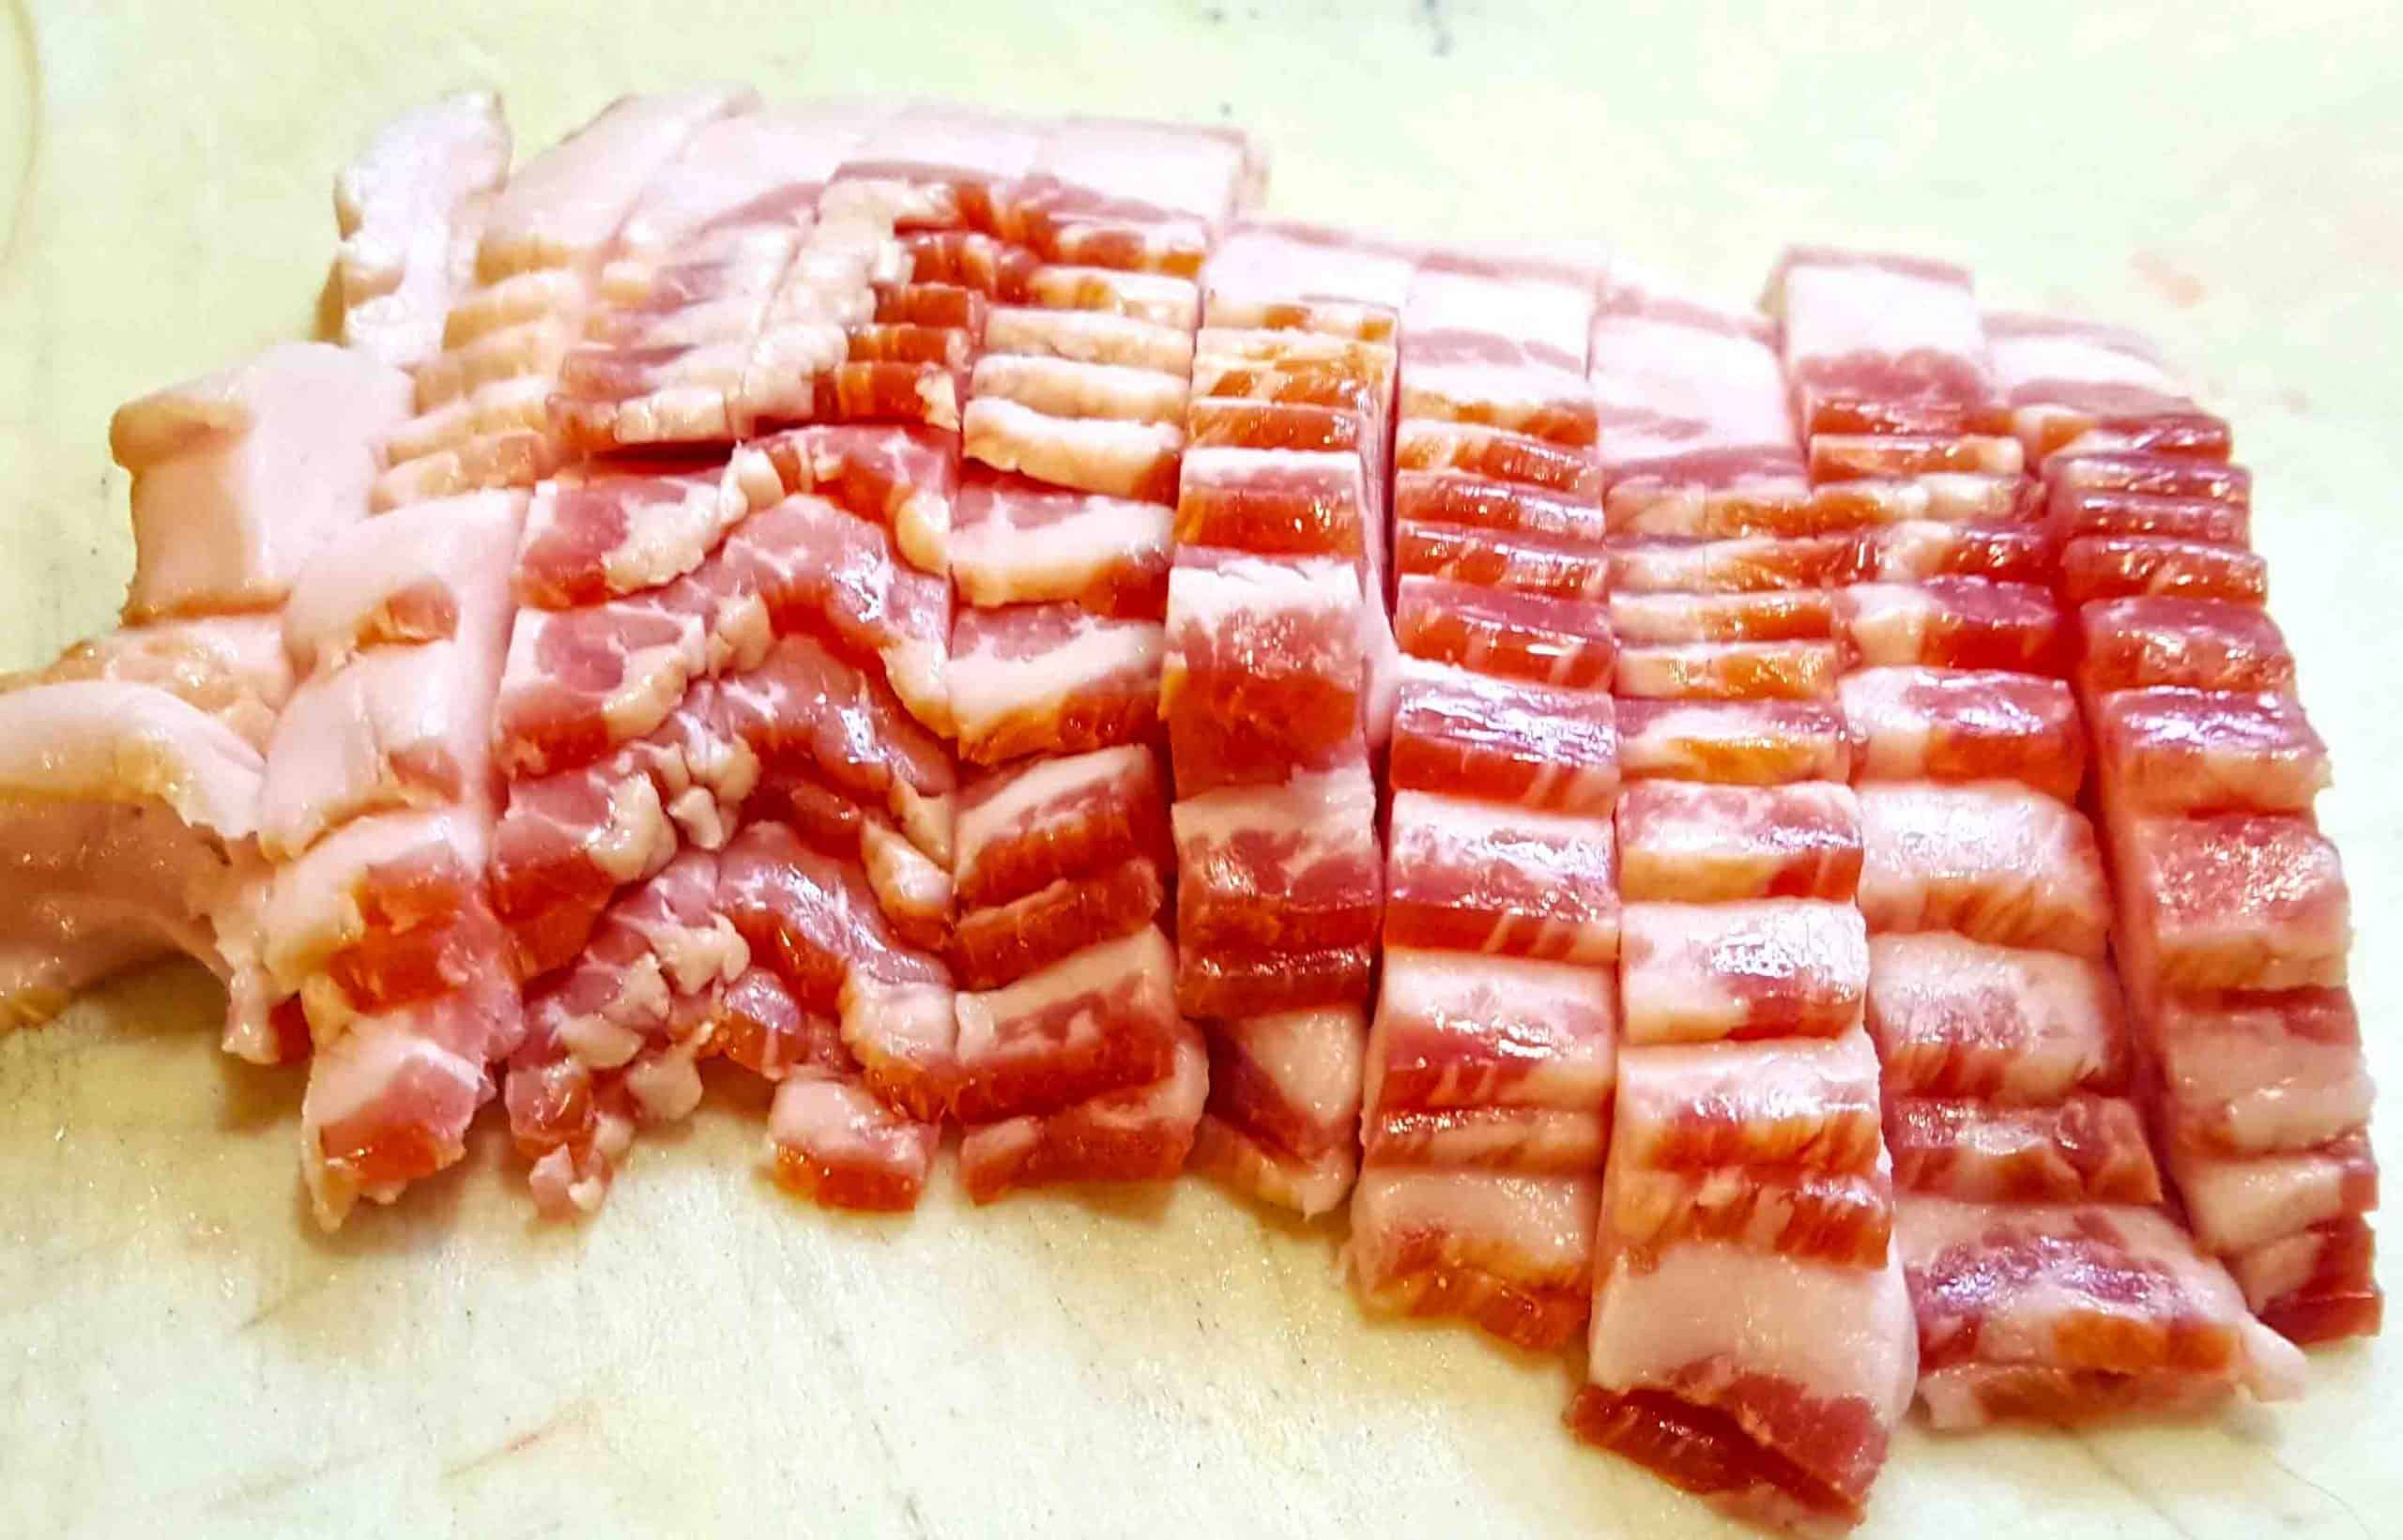 https://texasbutter.com/recipes/wp-content/uploads/2019/07/texas-butter-chum-bacon-scaled.jpg